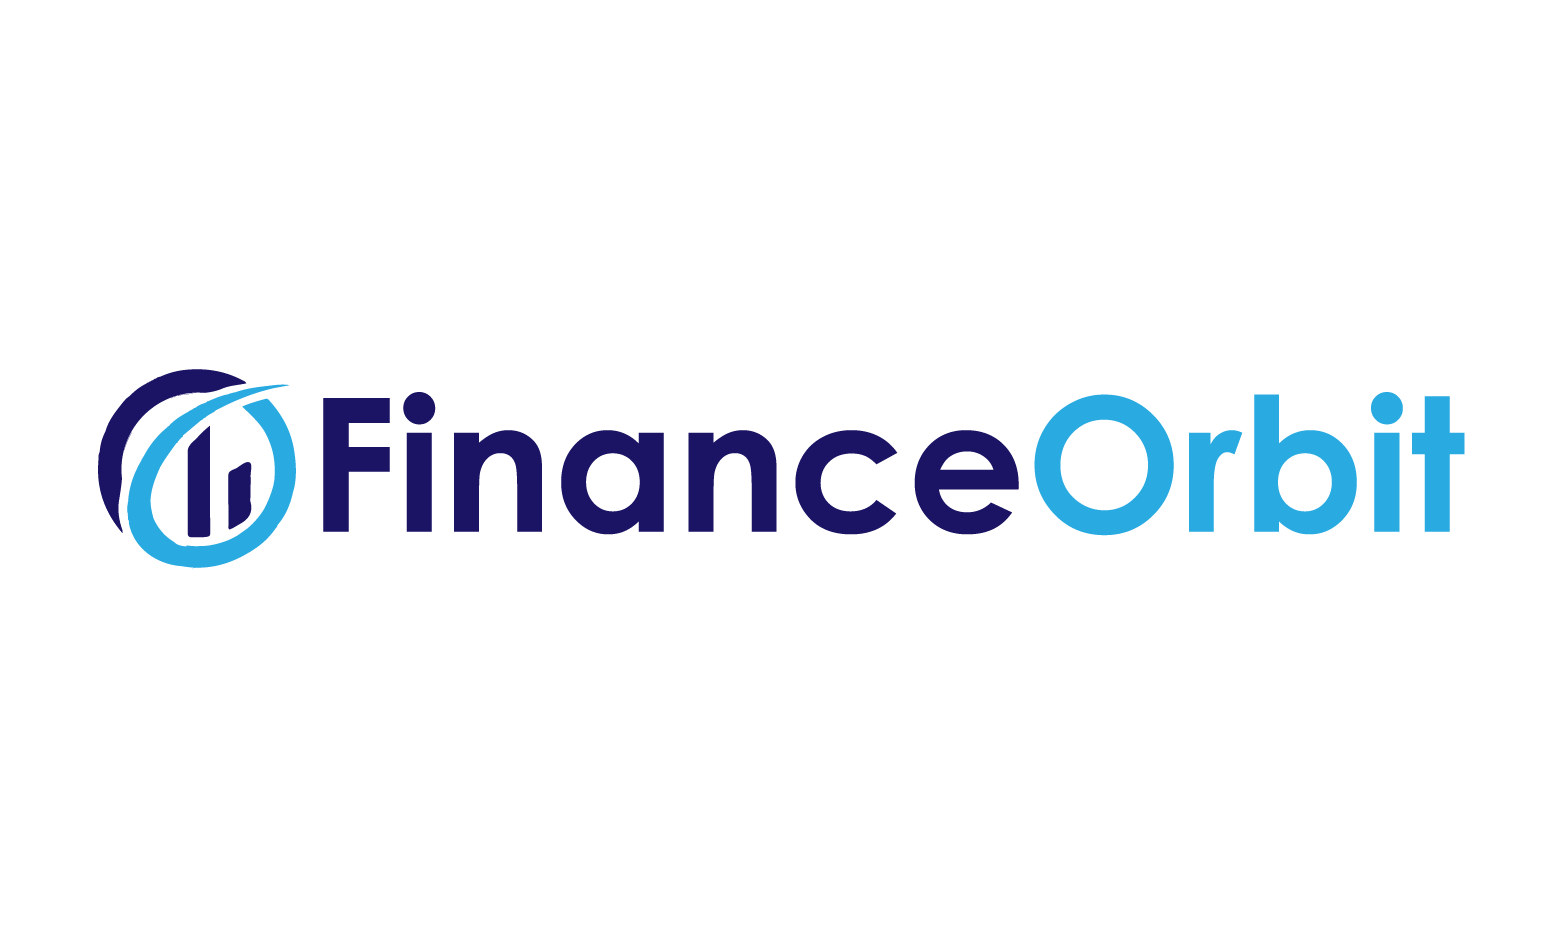 FinanceOrbit.com - Creative brandable domain for sale